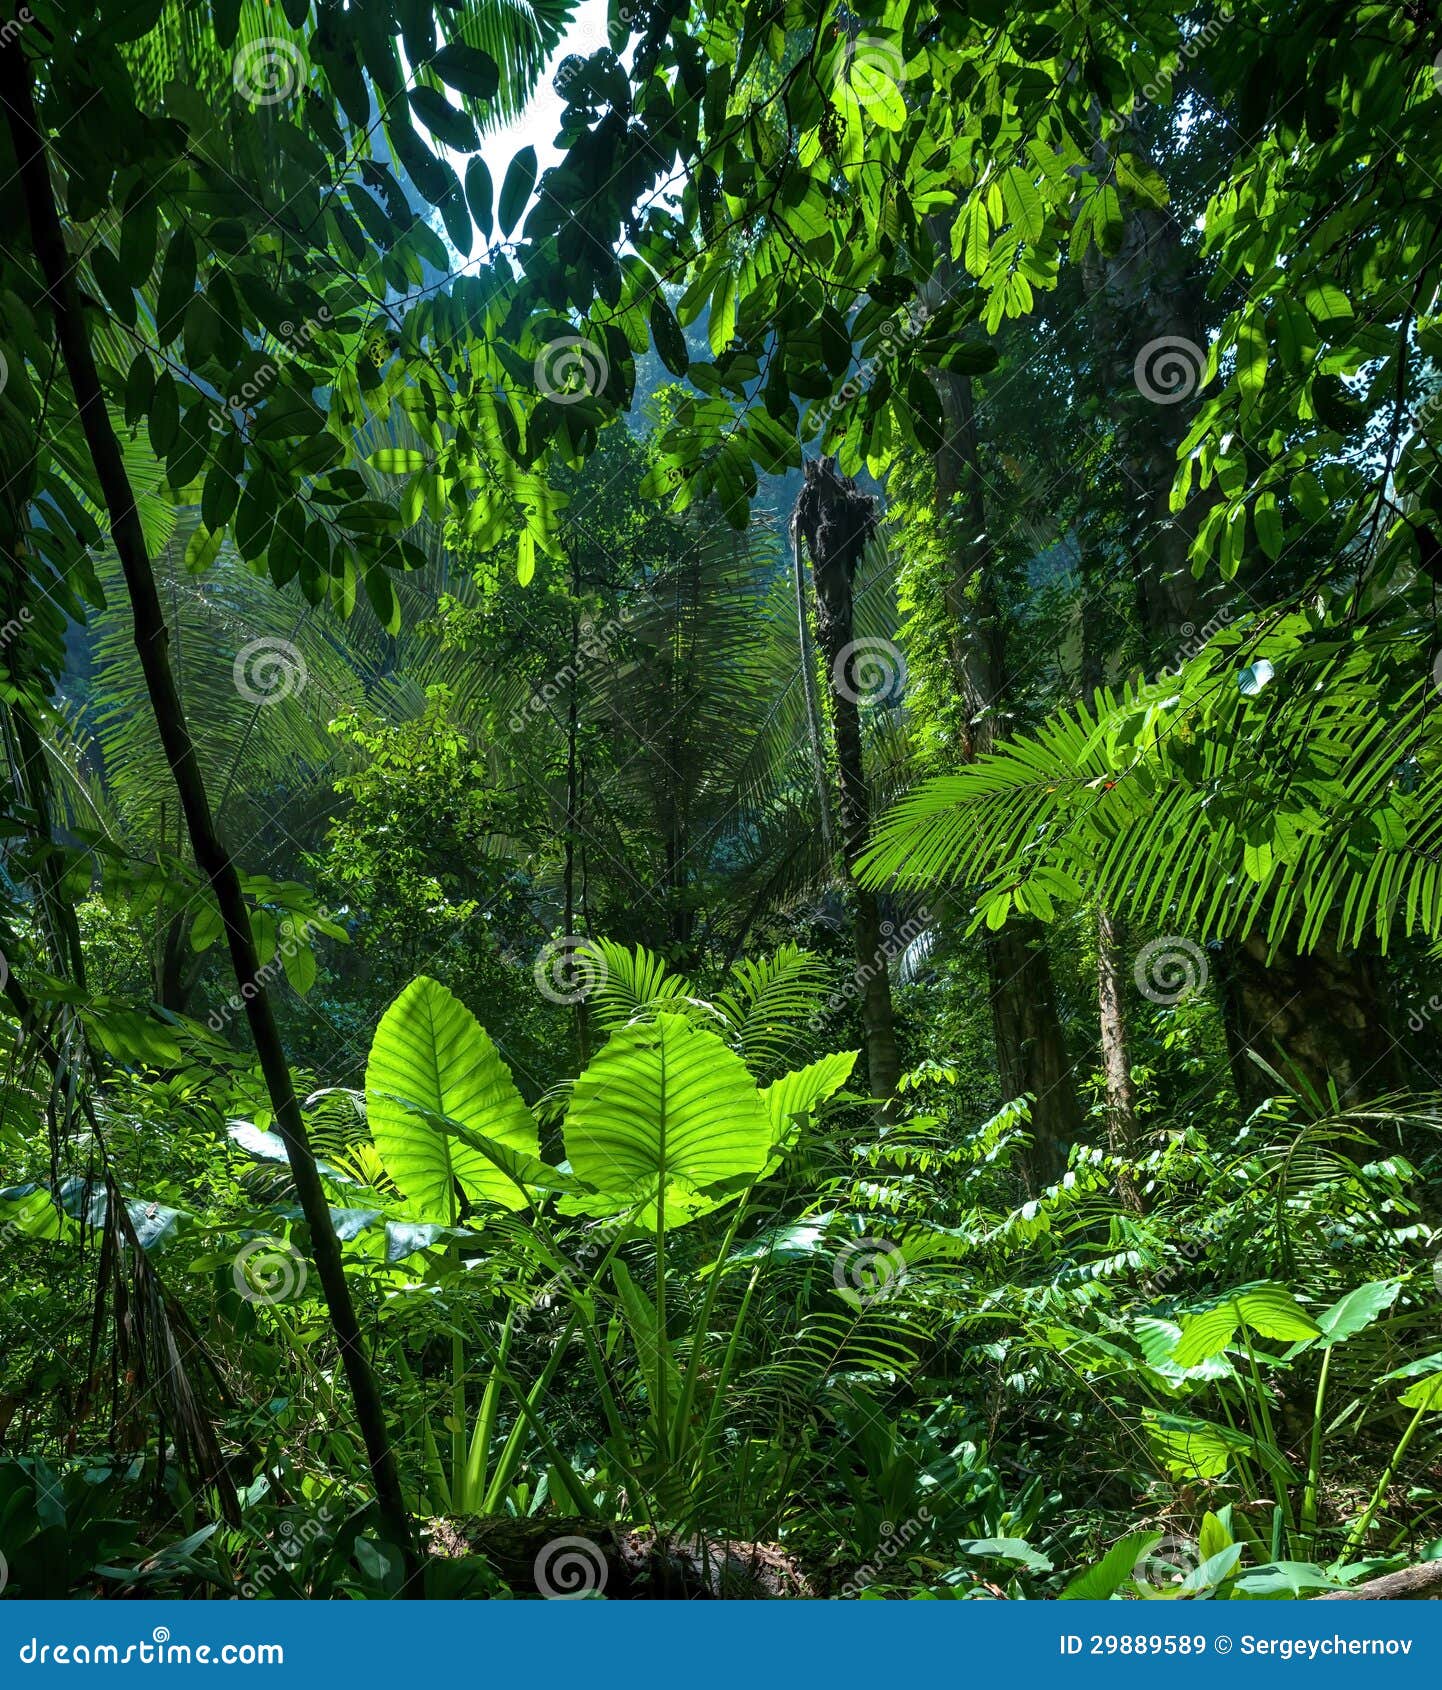 Adventure Background Green Jungle Stock Image Image 29889589